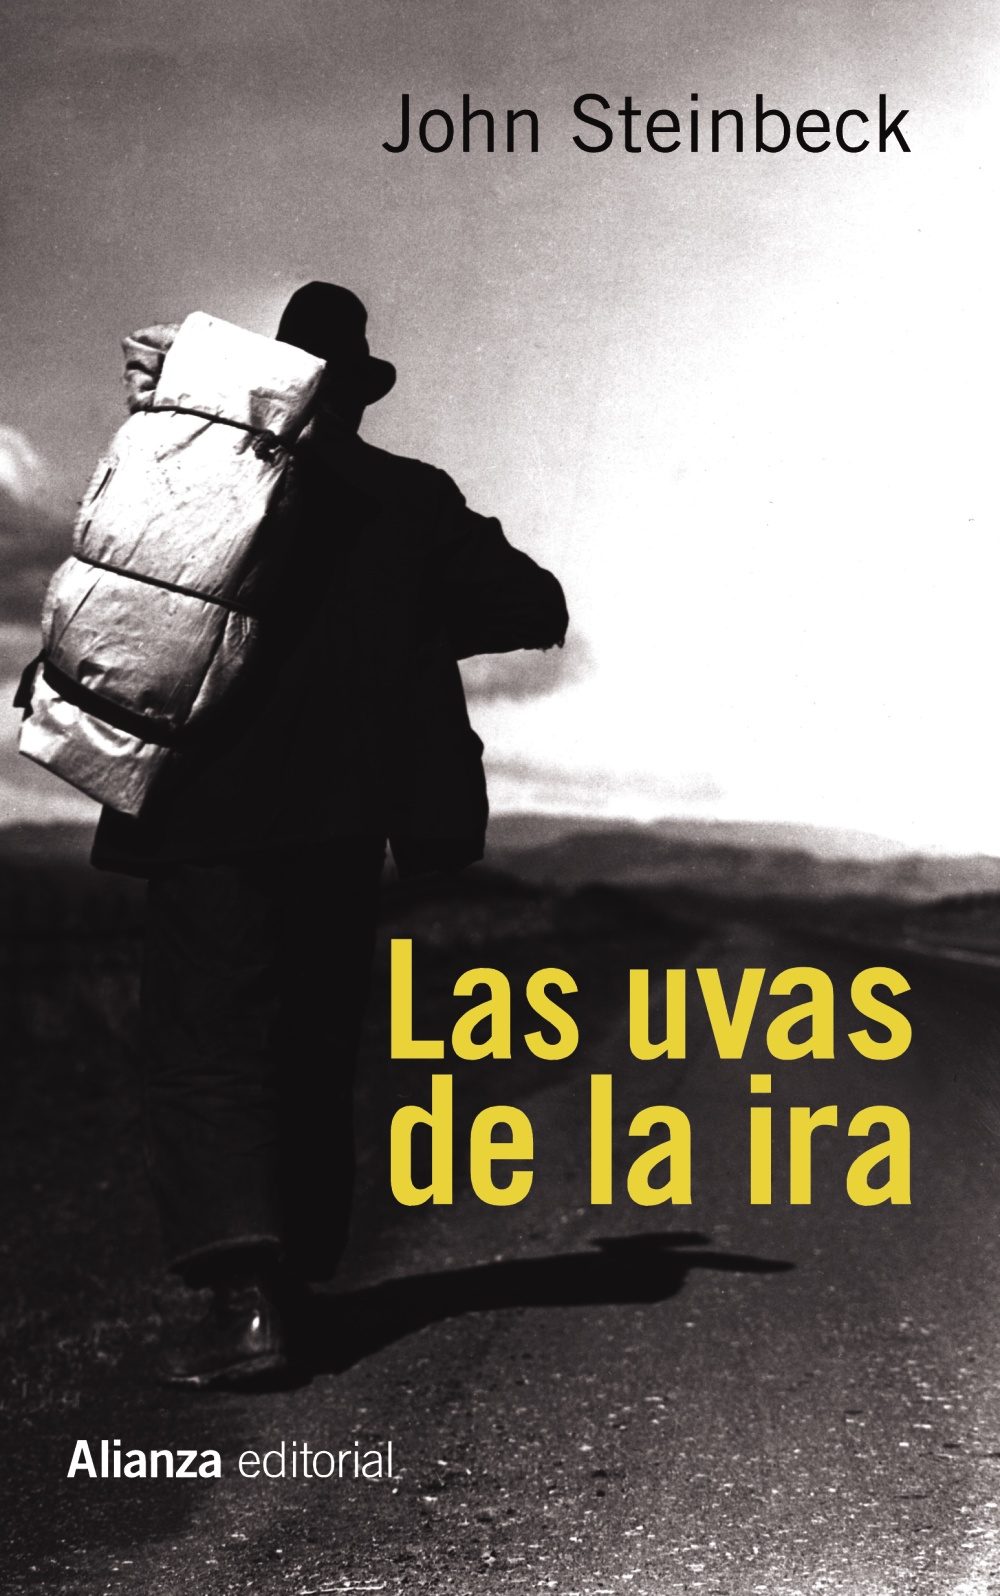 Image result for "las uvas de la ira" alianza